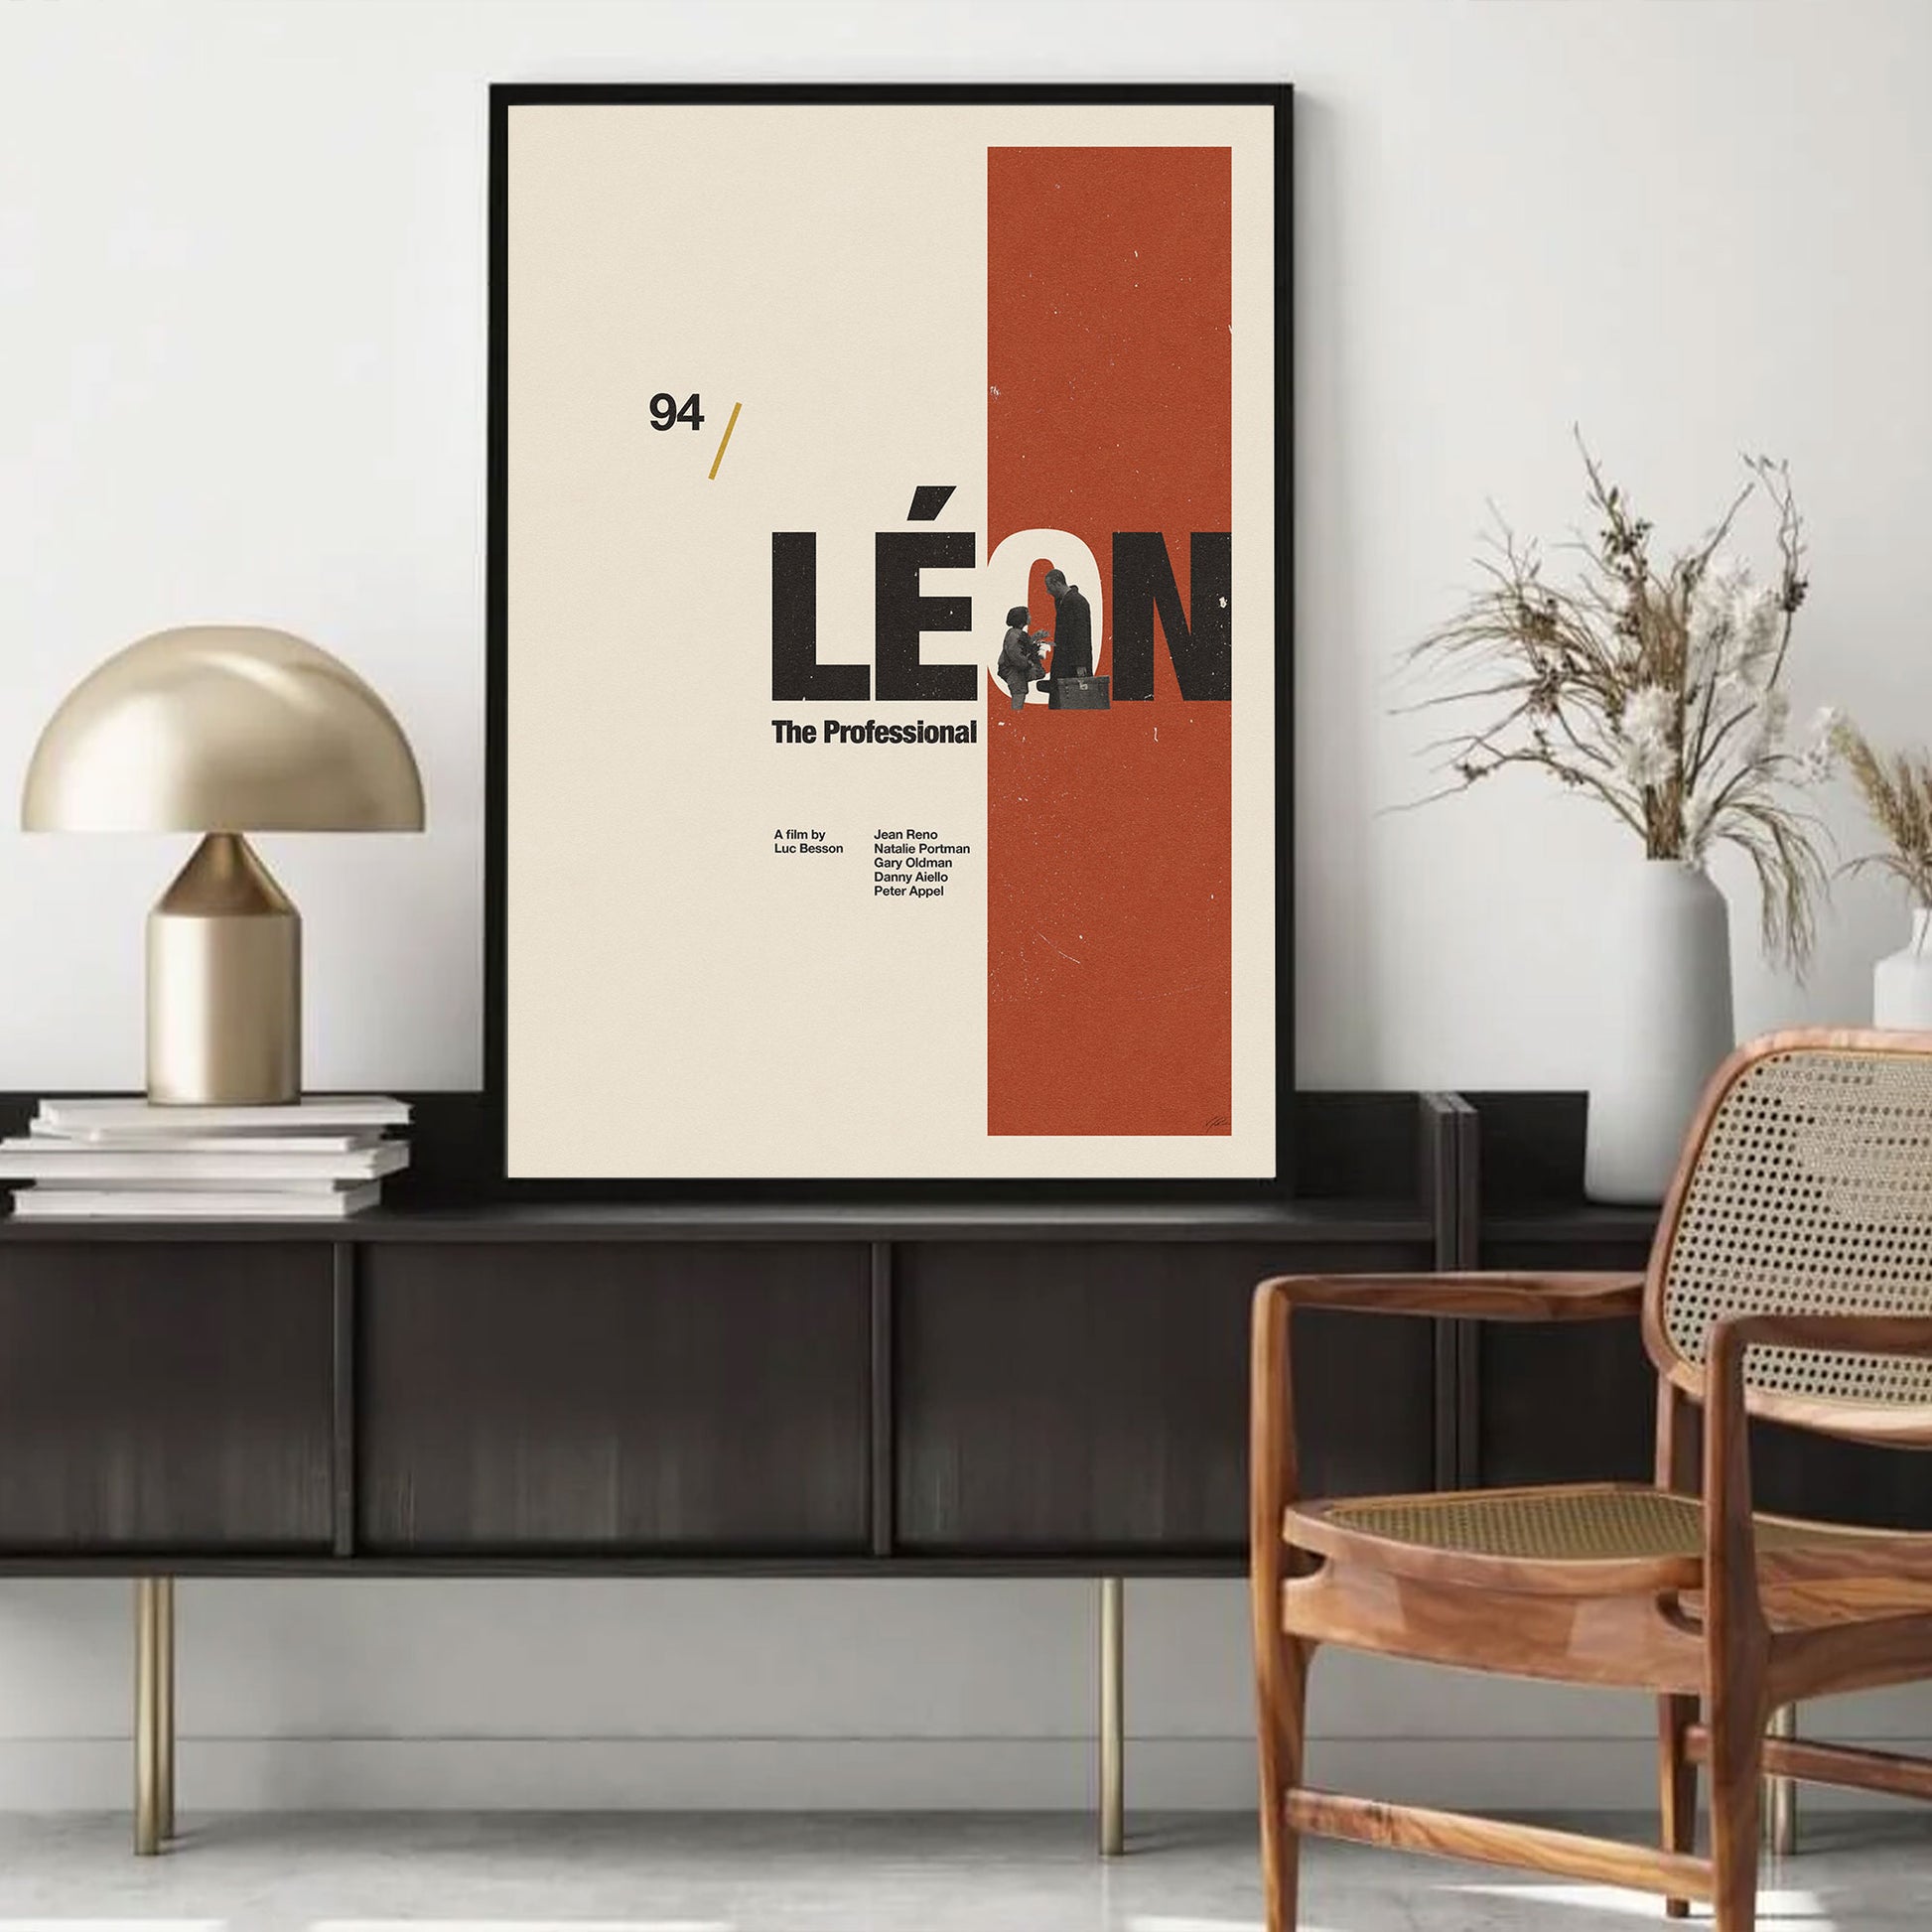 Leon The Professional - Poster - leon, mid century movie, movie poster